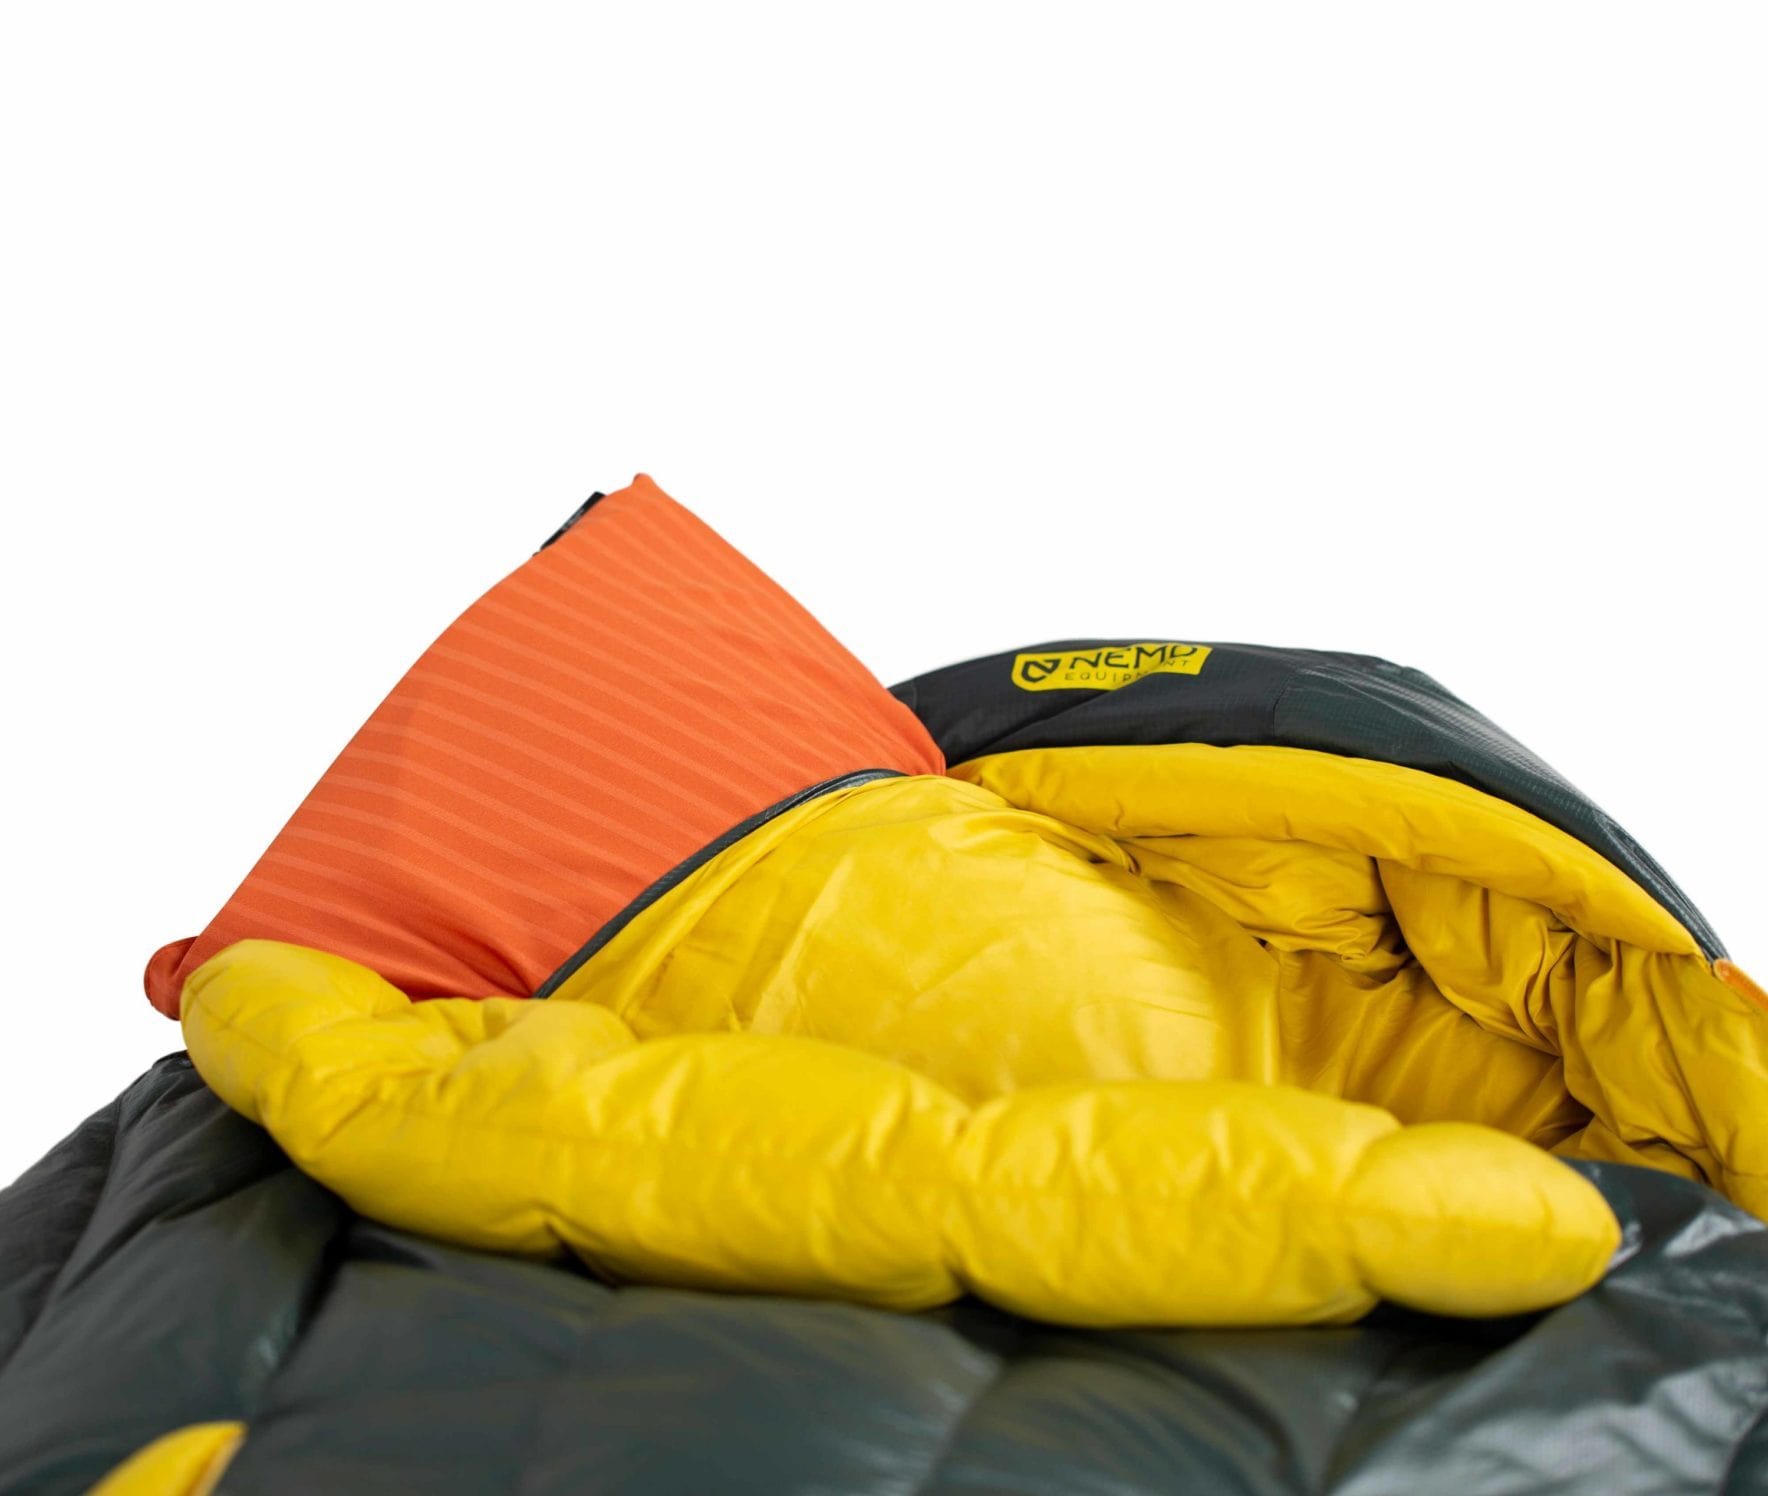 nemo Sleeping Bag Riff Down (30°F / -1°C) Sleeping Bag